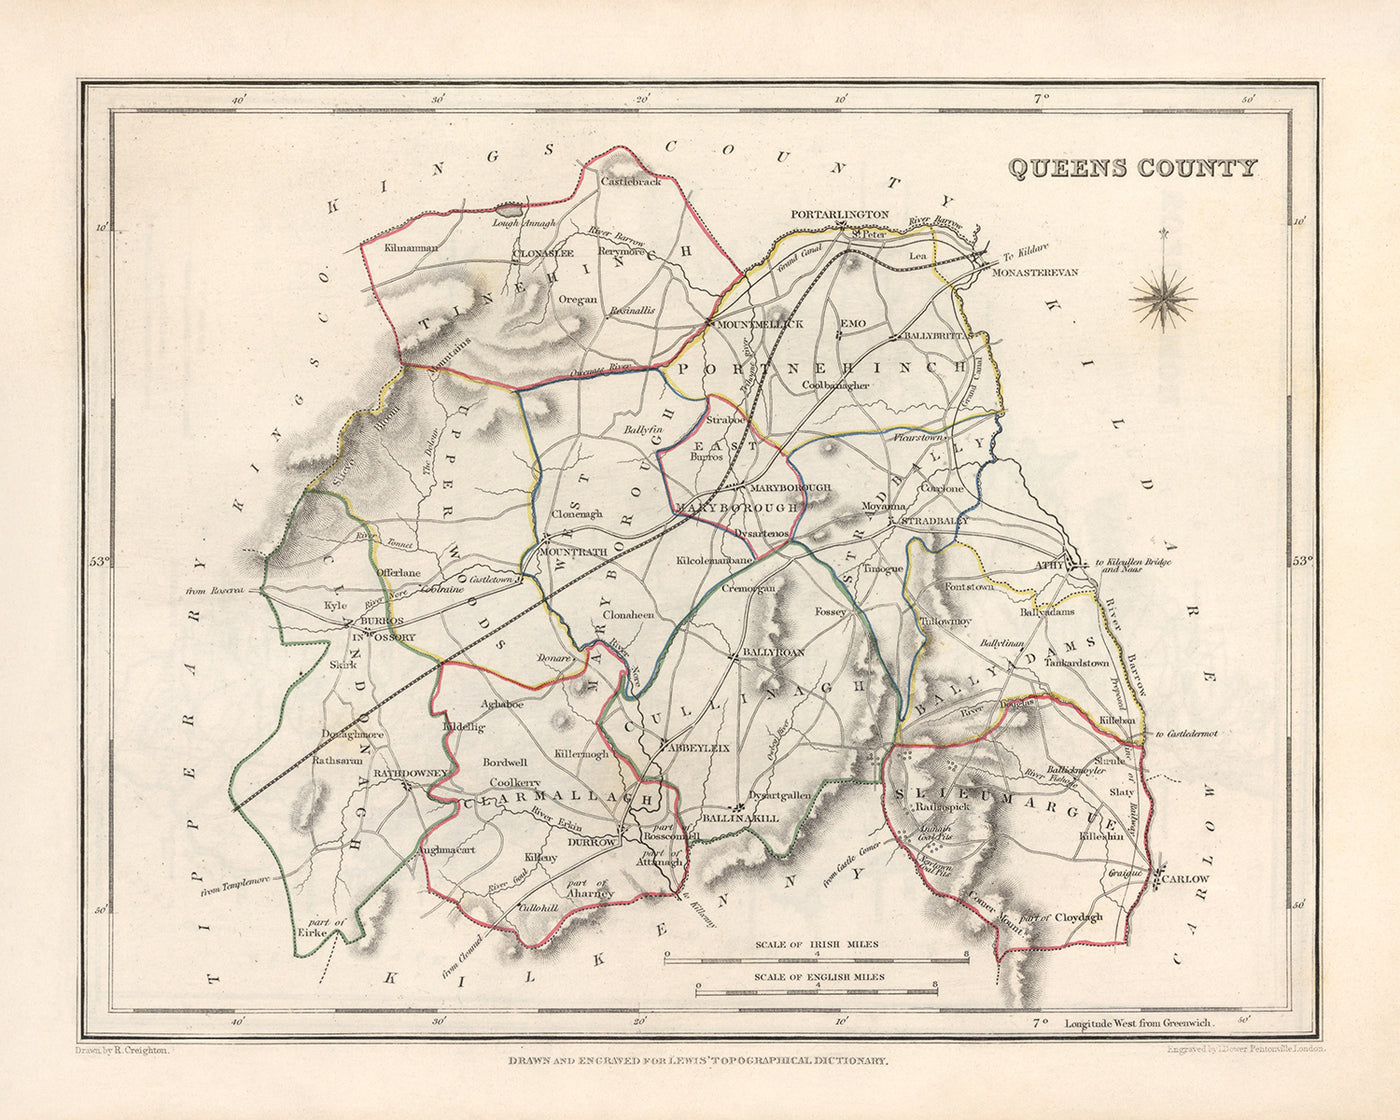 Old Map of County Laois (Queen's) by Samuel Lewis, 1844: Abbeyleix, Ballybrittas, Durrow, Mountmellick, Stradbally